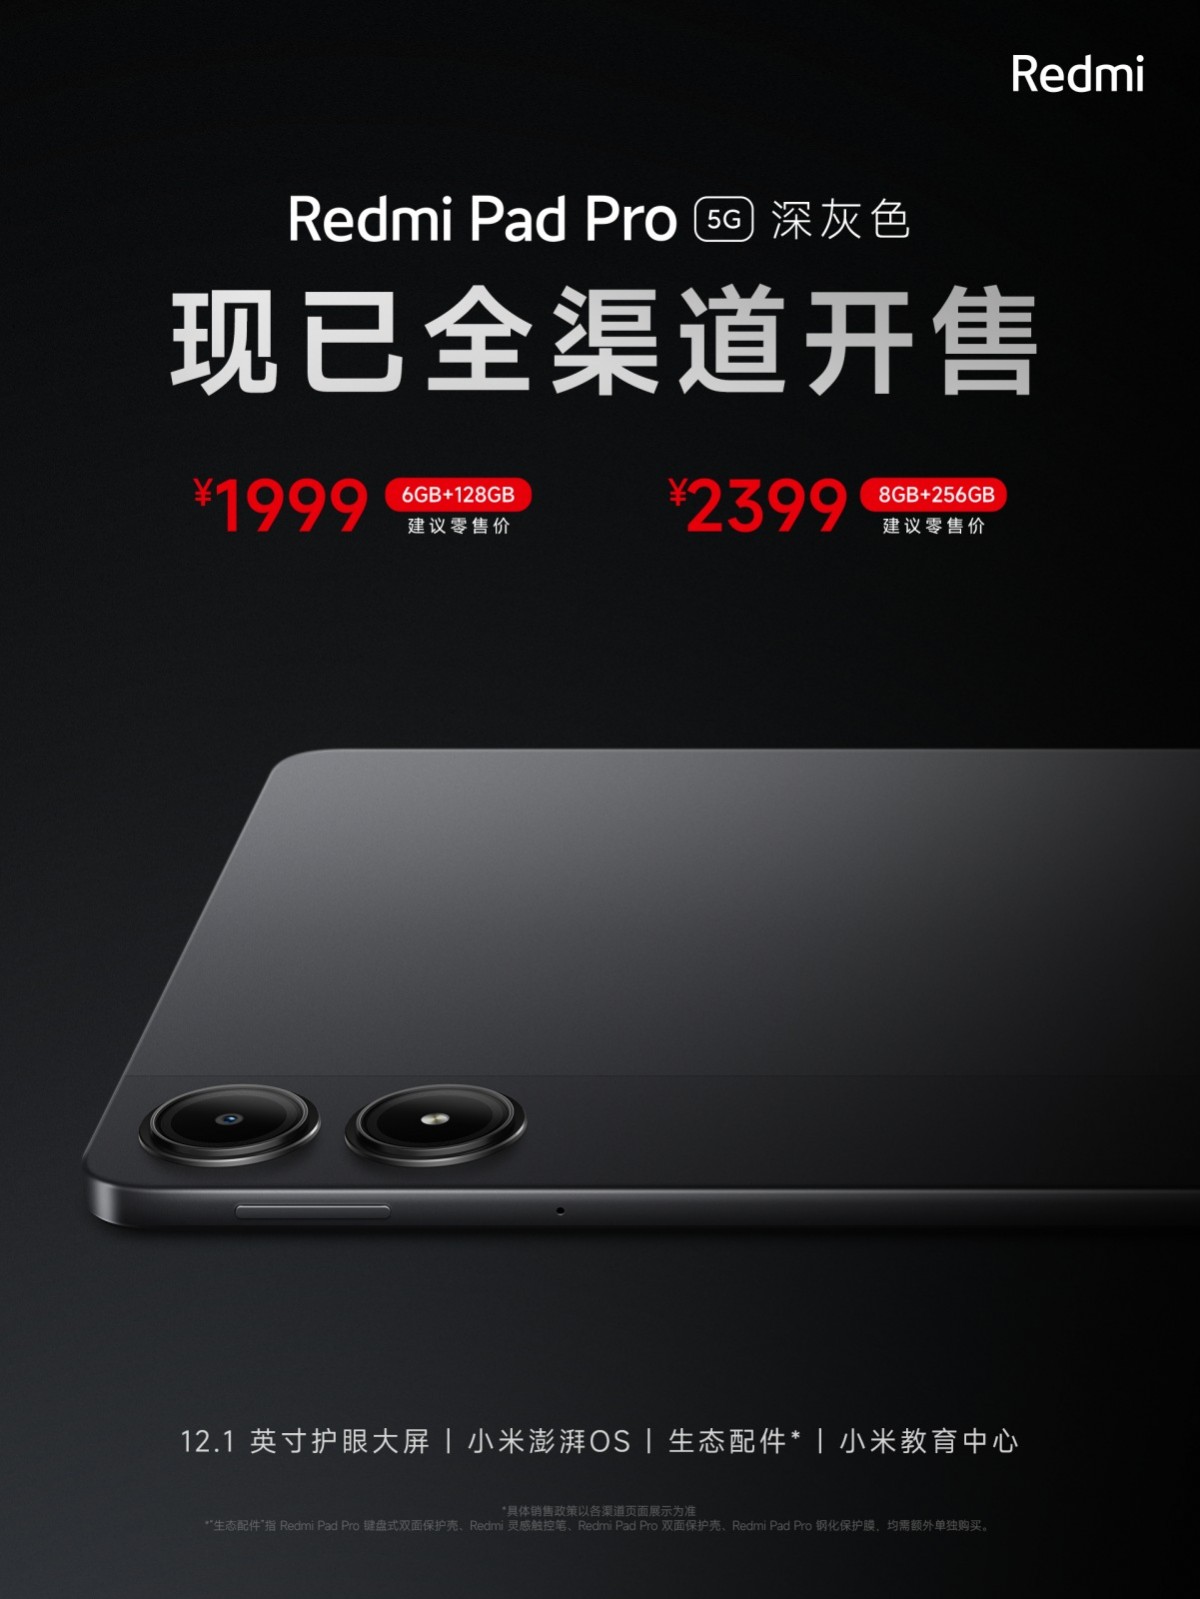 Xiaomi Redmi Pad Pro 5G geliyor!